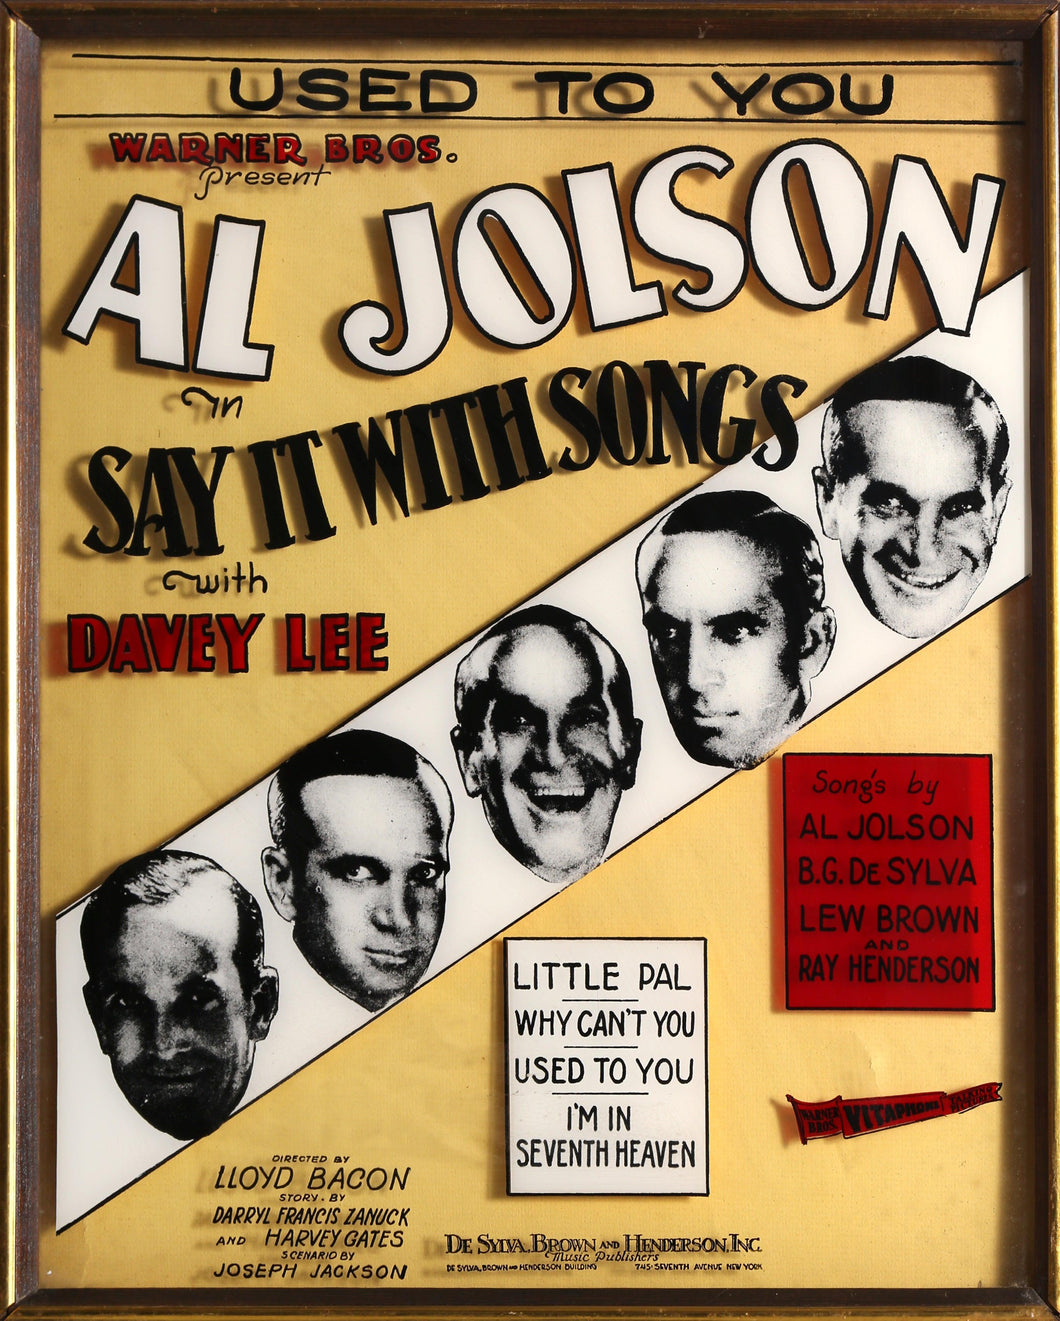 Say It With Songs - Al Jonson Screenprint | Unknown Artist,{{product.type}}